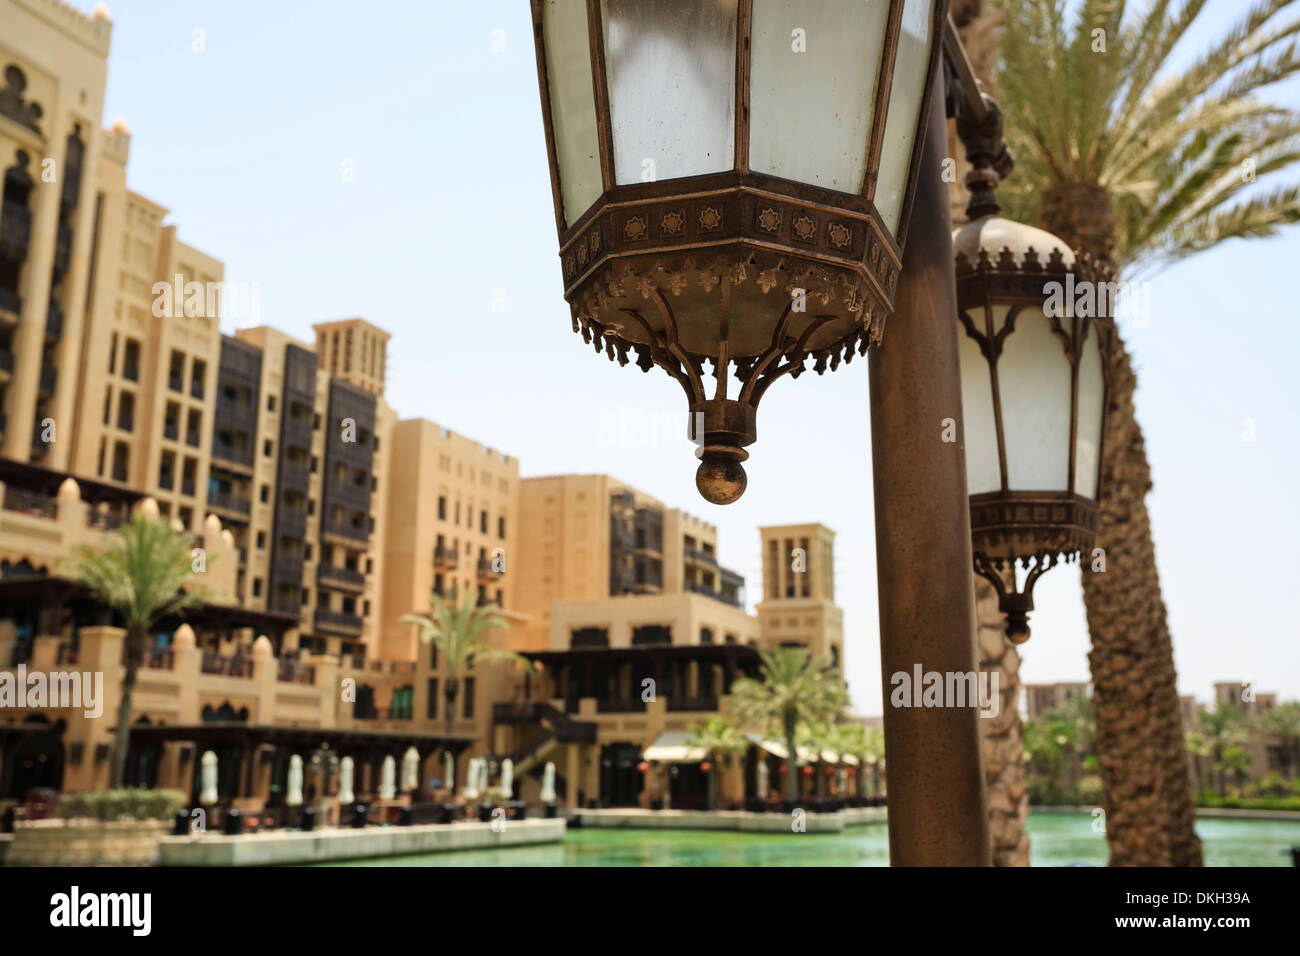 Madinat Jumeirah Hotel, Dubai, Émirats arabes unis, Moyen Orient Banque D'Images